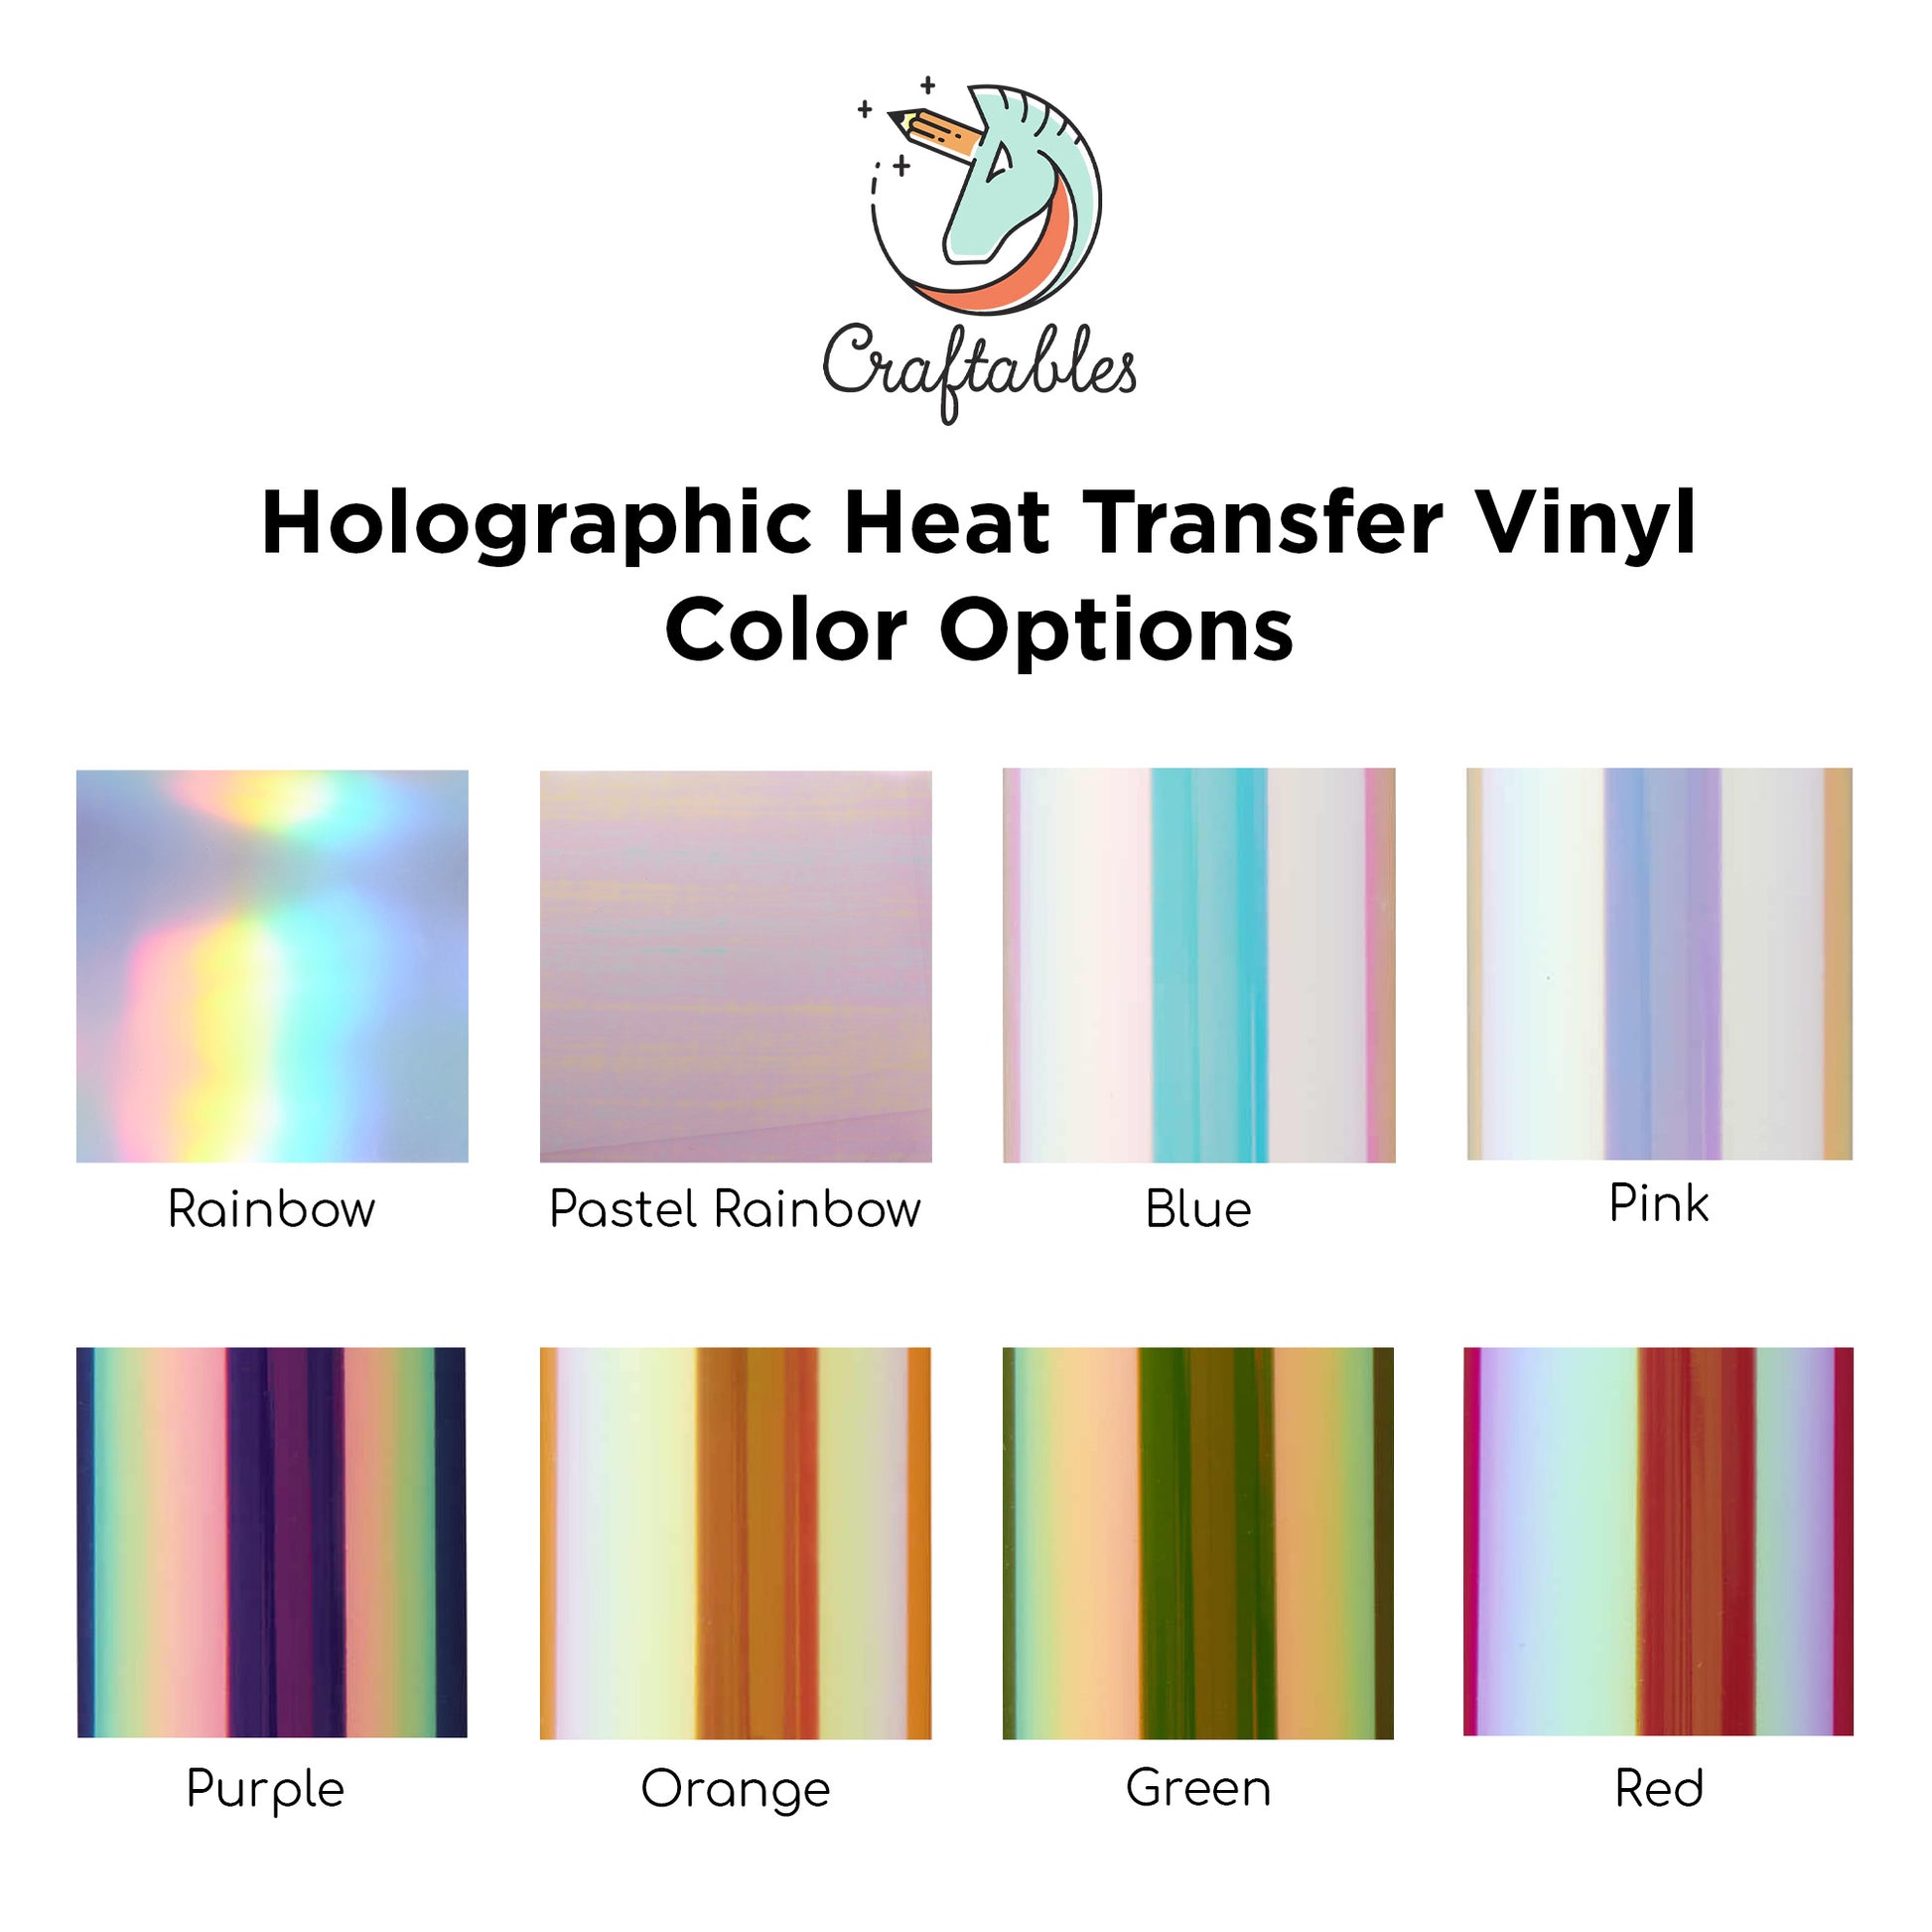 Rainbow Printed Pattern Heat Transfer Vinyl Sheets By Craftables